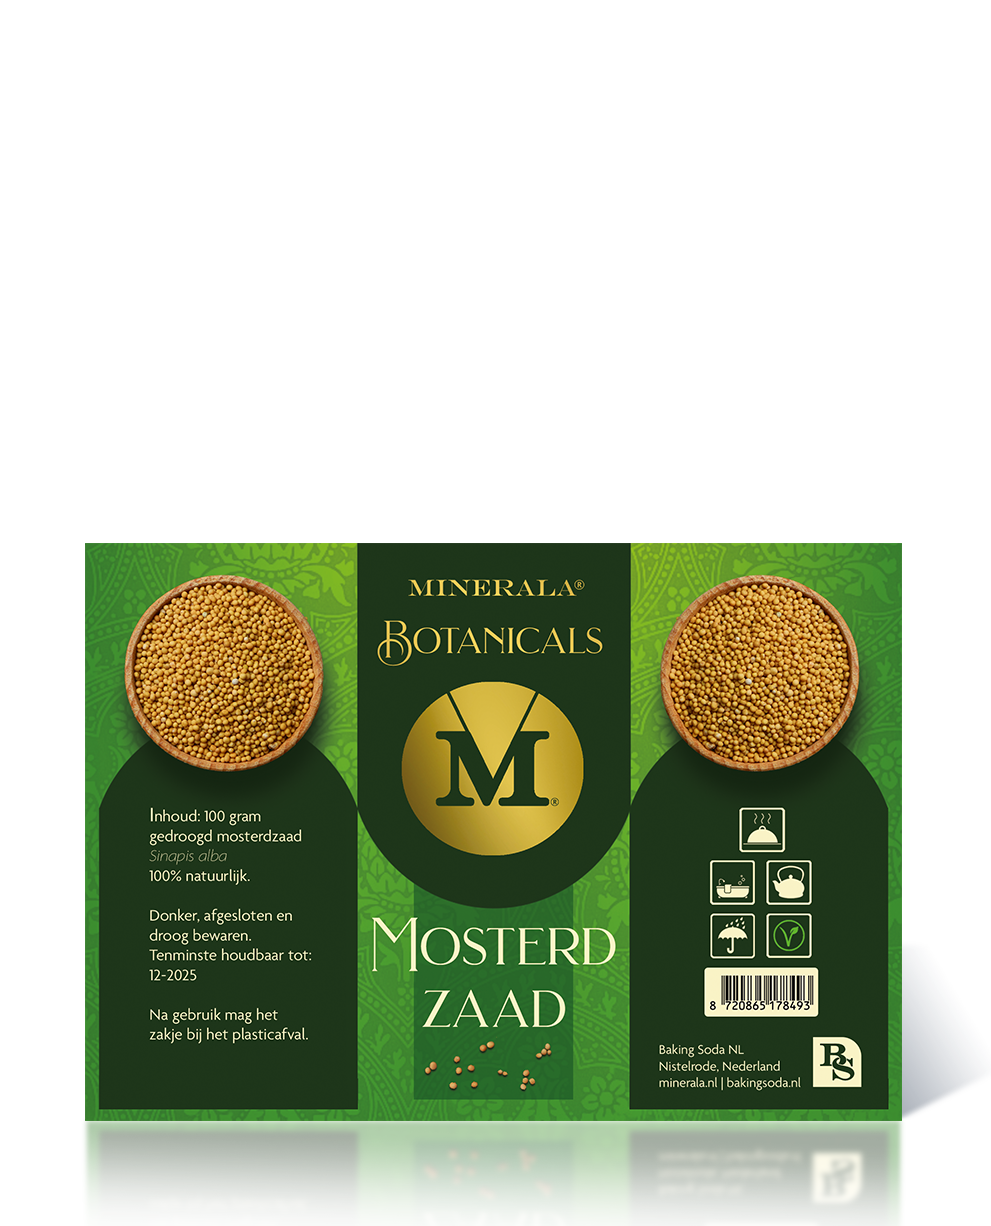 Minerala Botanicals Mosterd zaad - Bakingsoda NL